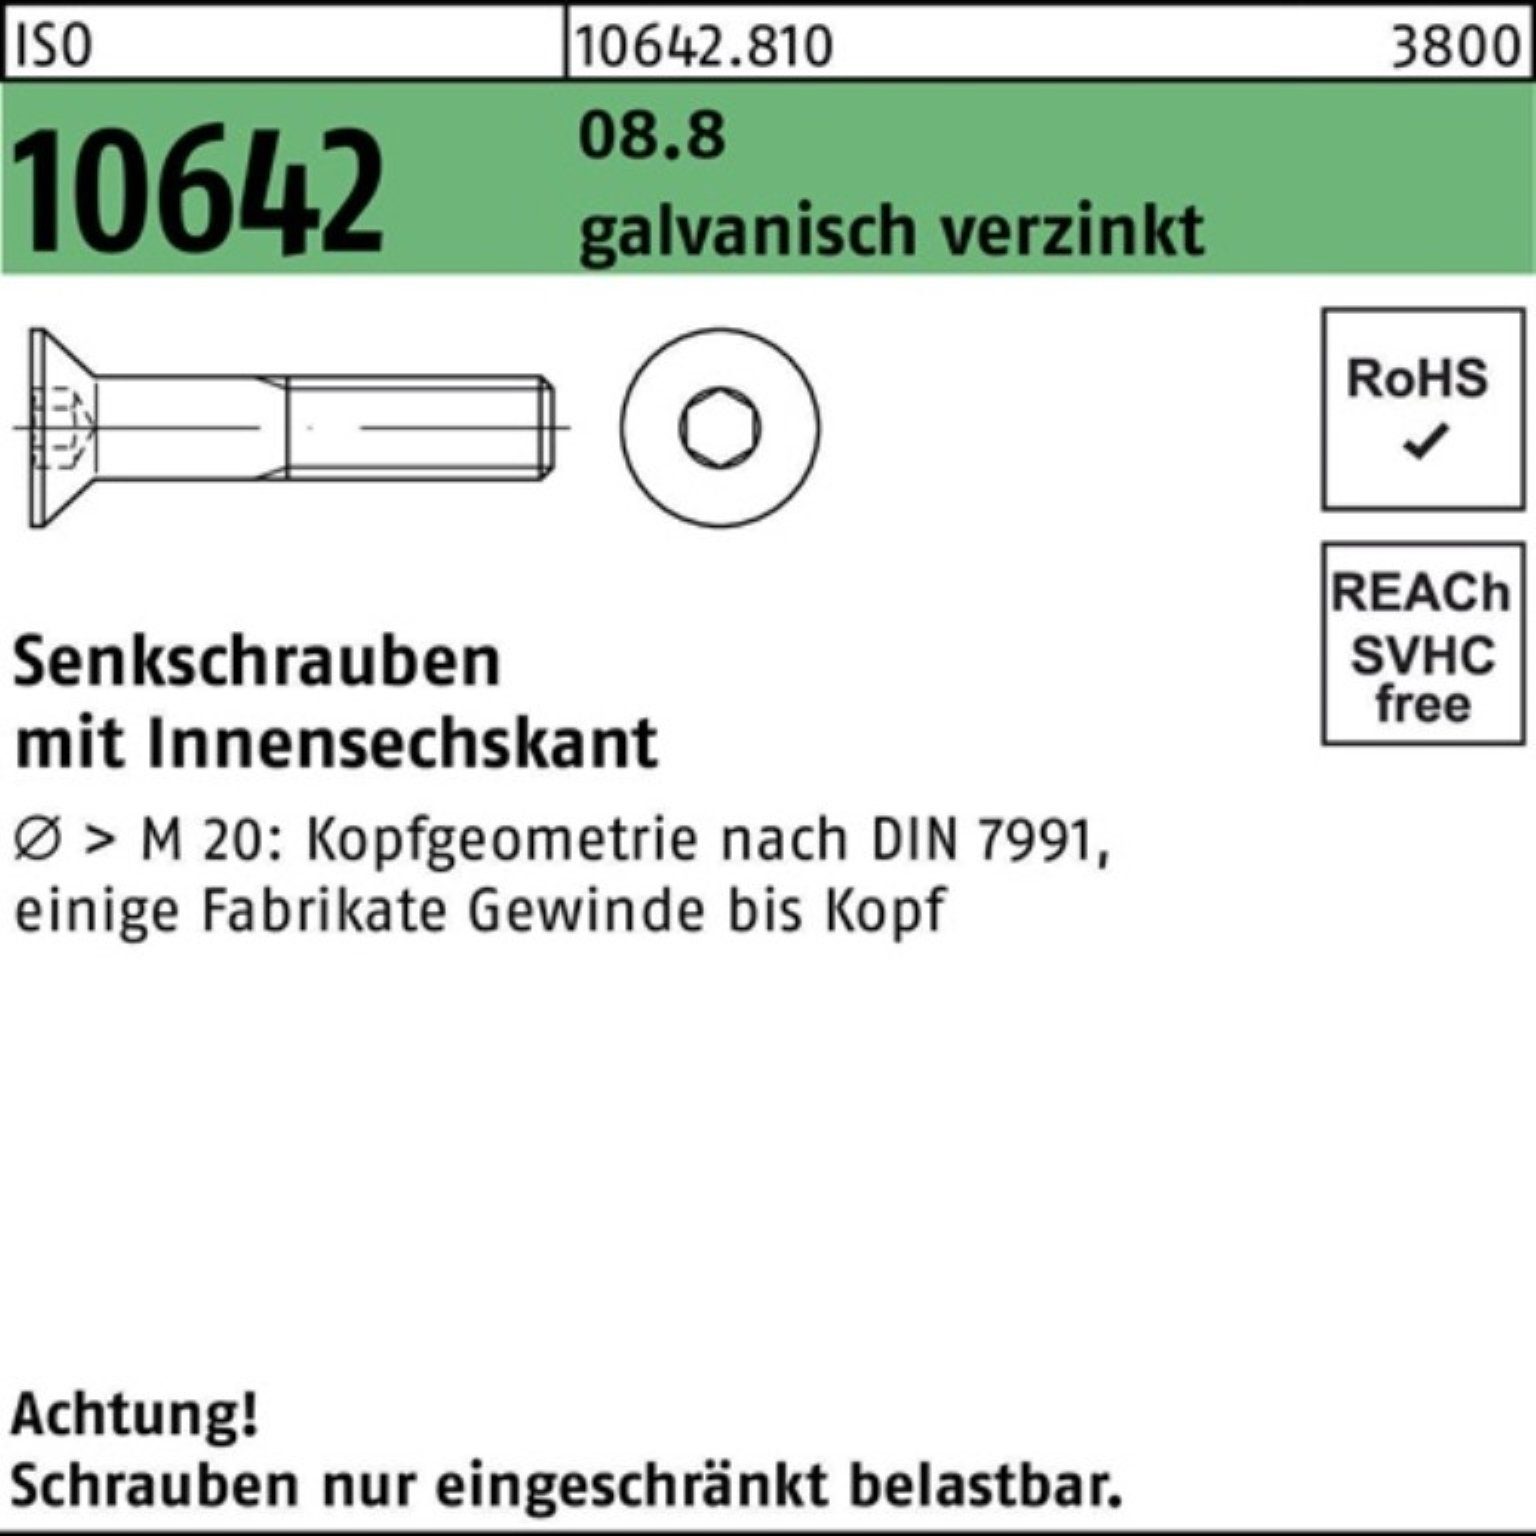 Senkschraube 20 10642 500 M6x ISO 8.8 galv.verz. 500er Pack Senkschraube Reyher Innen-6kt